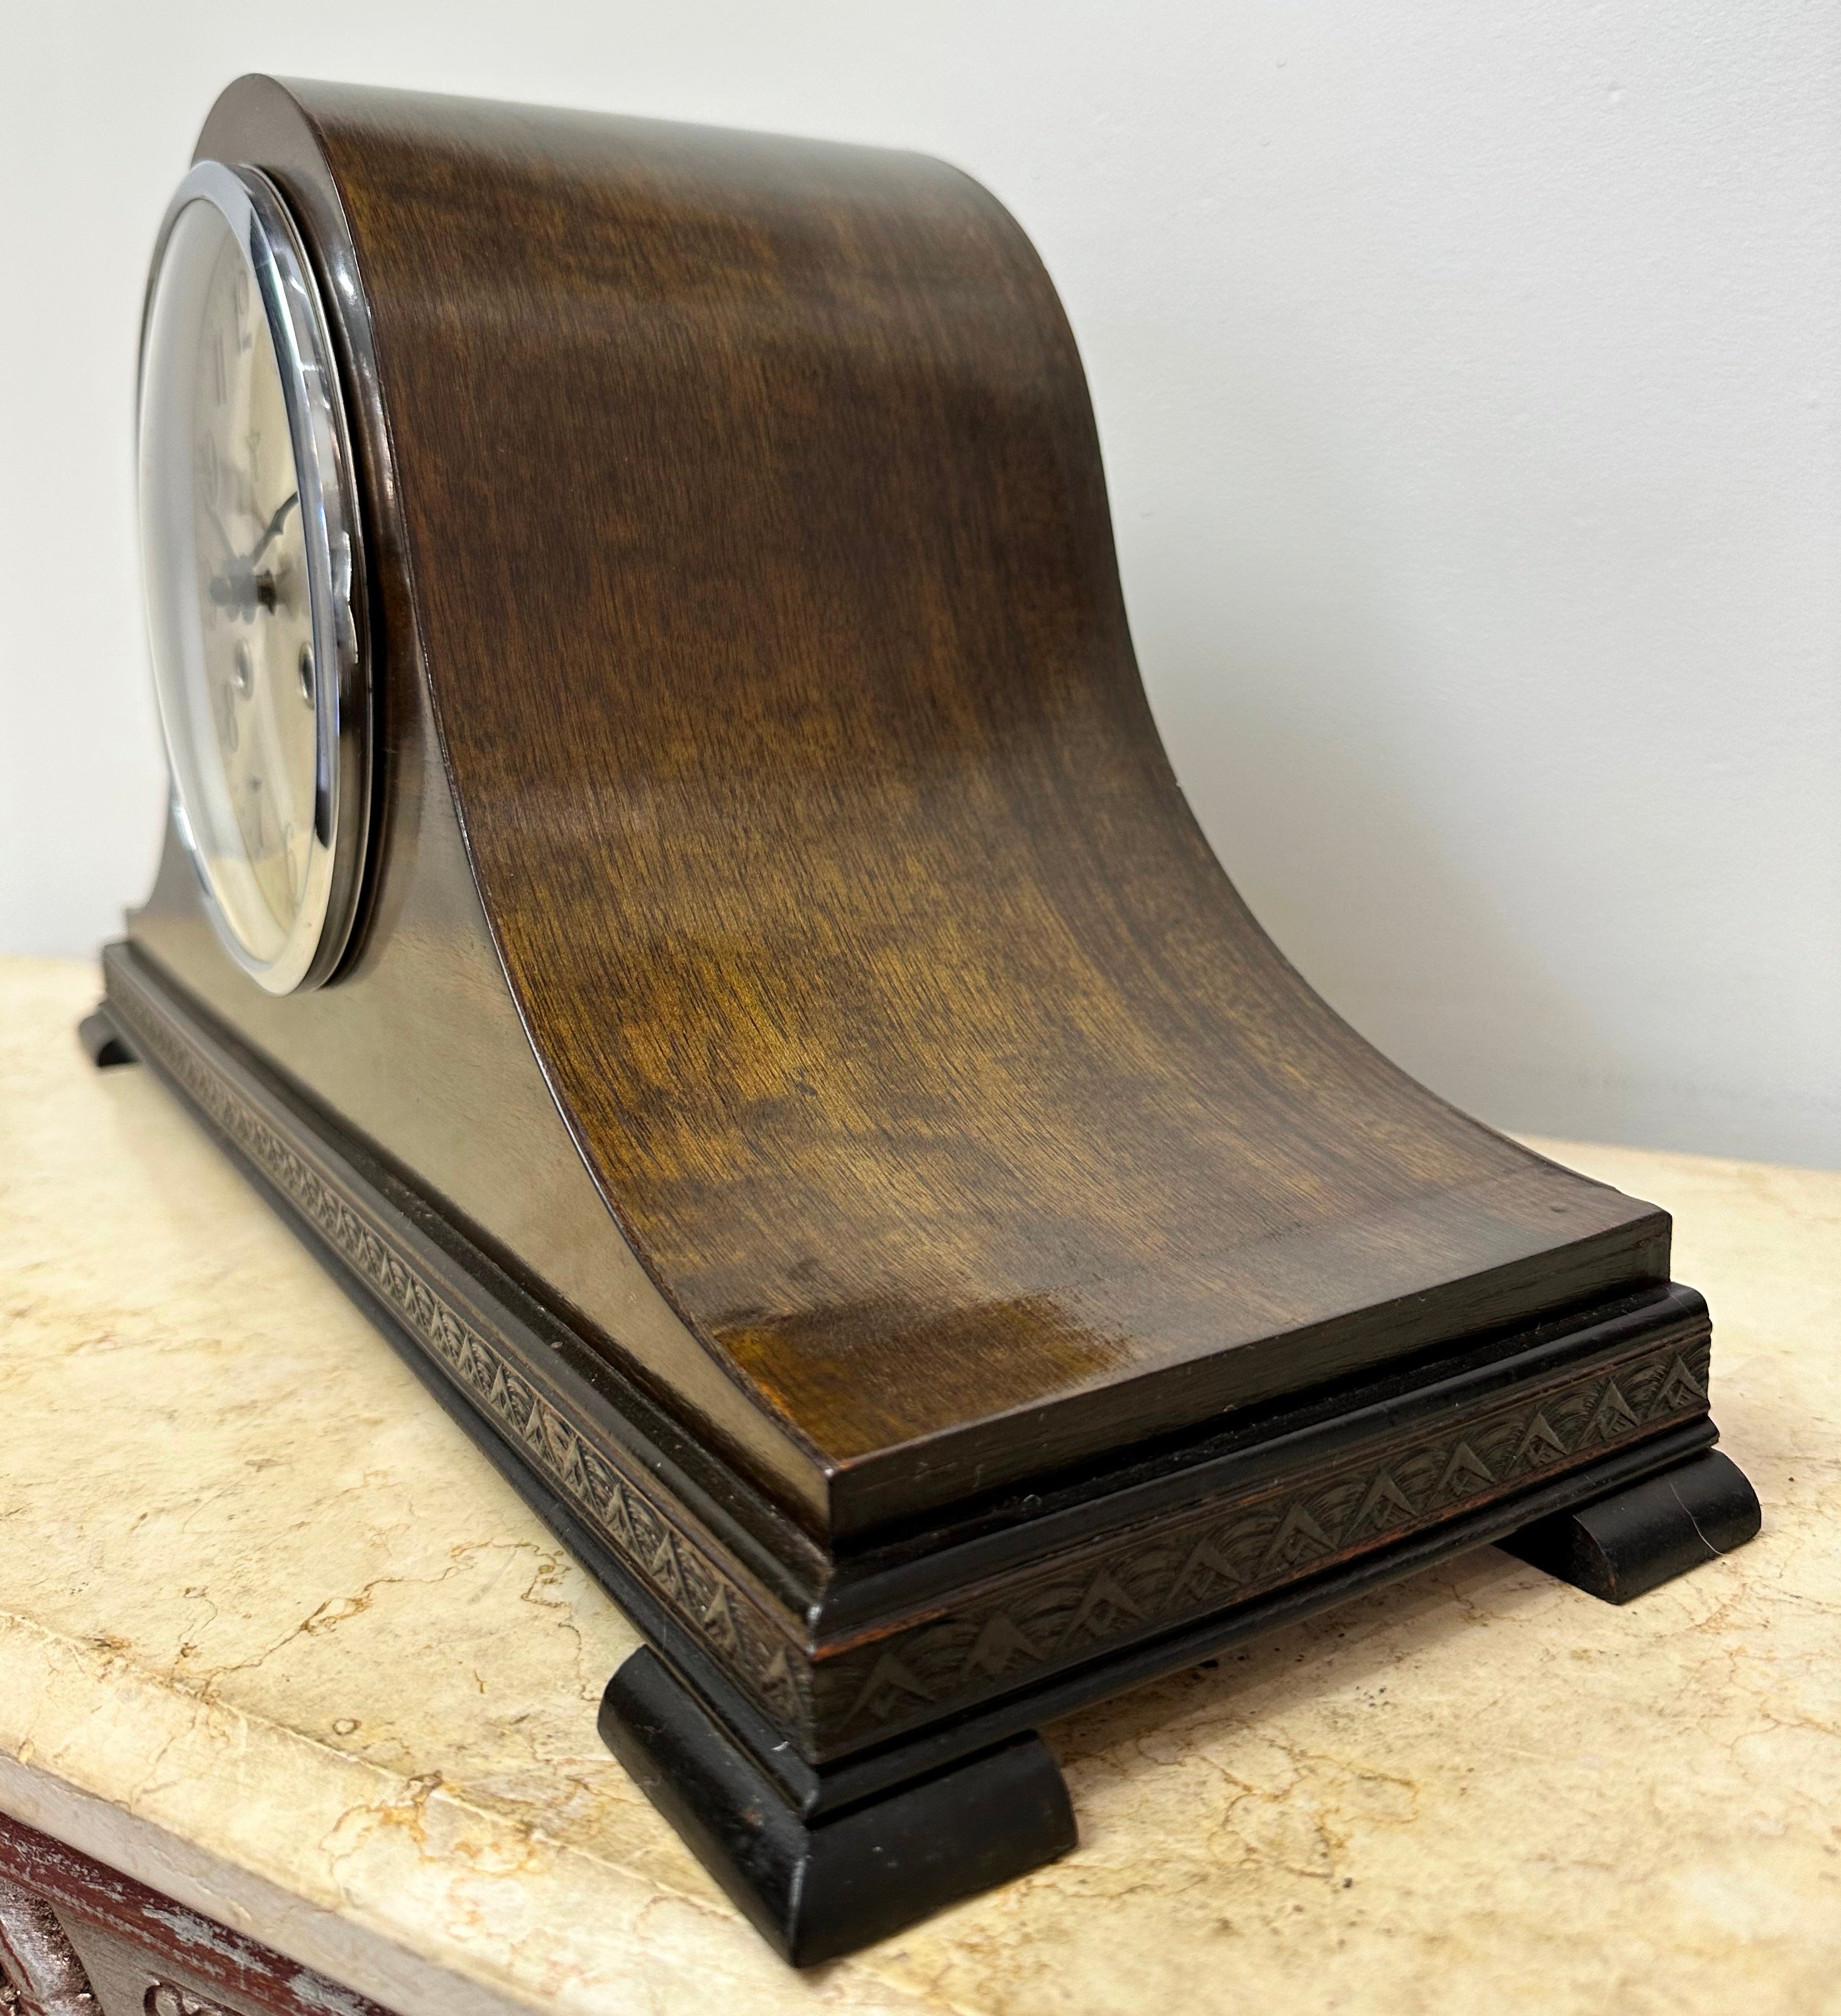 Vintage FMS Hammer on Coil Chime Pendulum Napoleon Mantel Clock | eXibit collection